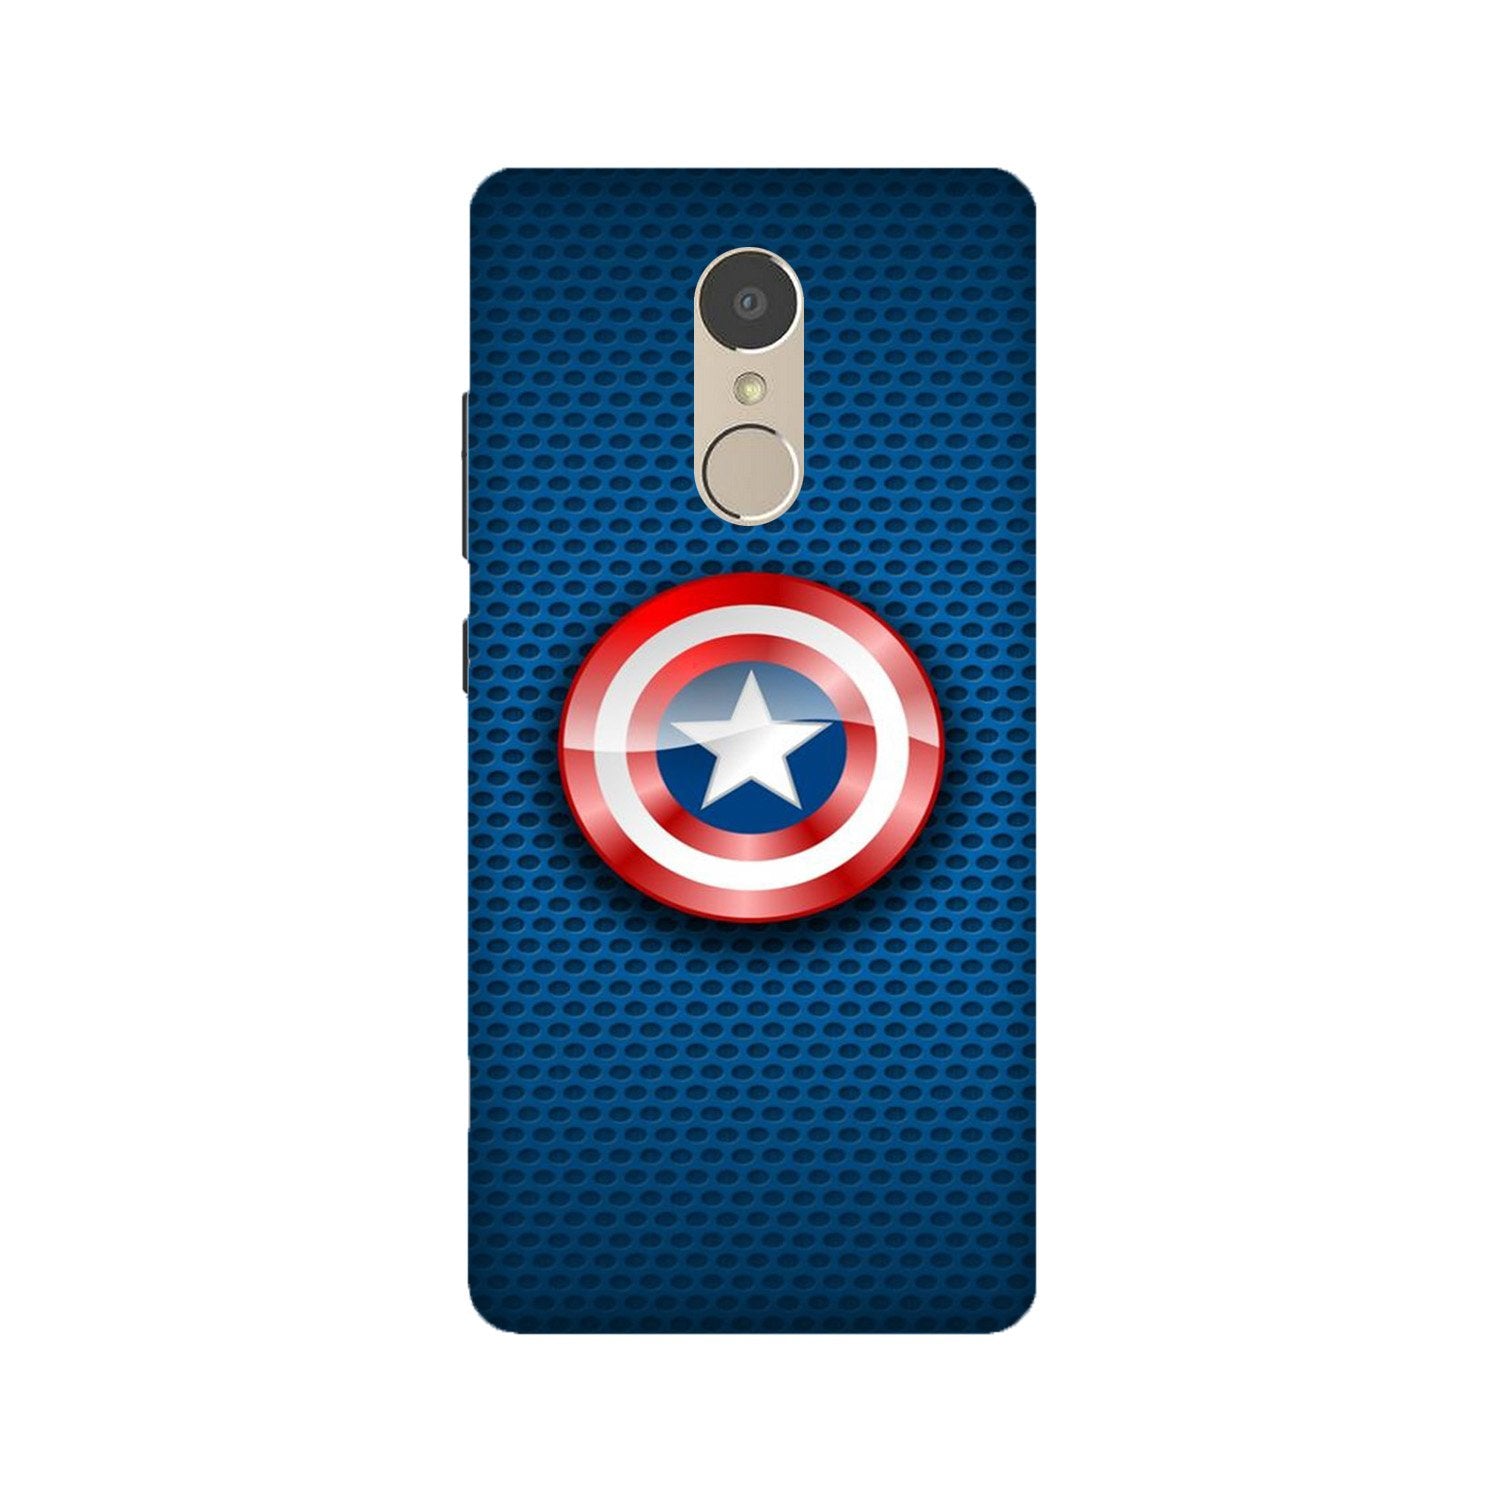 Captain America Shield Case for Lenovo K6 Note (Design No. 253)